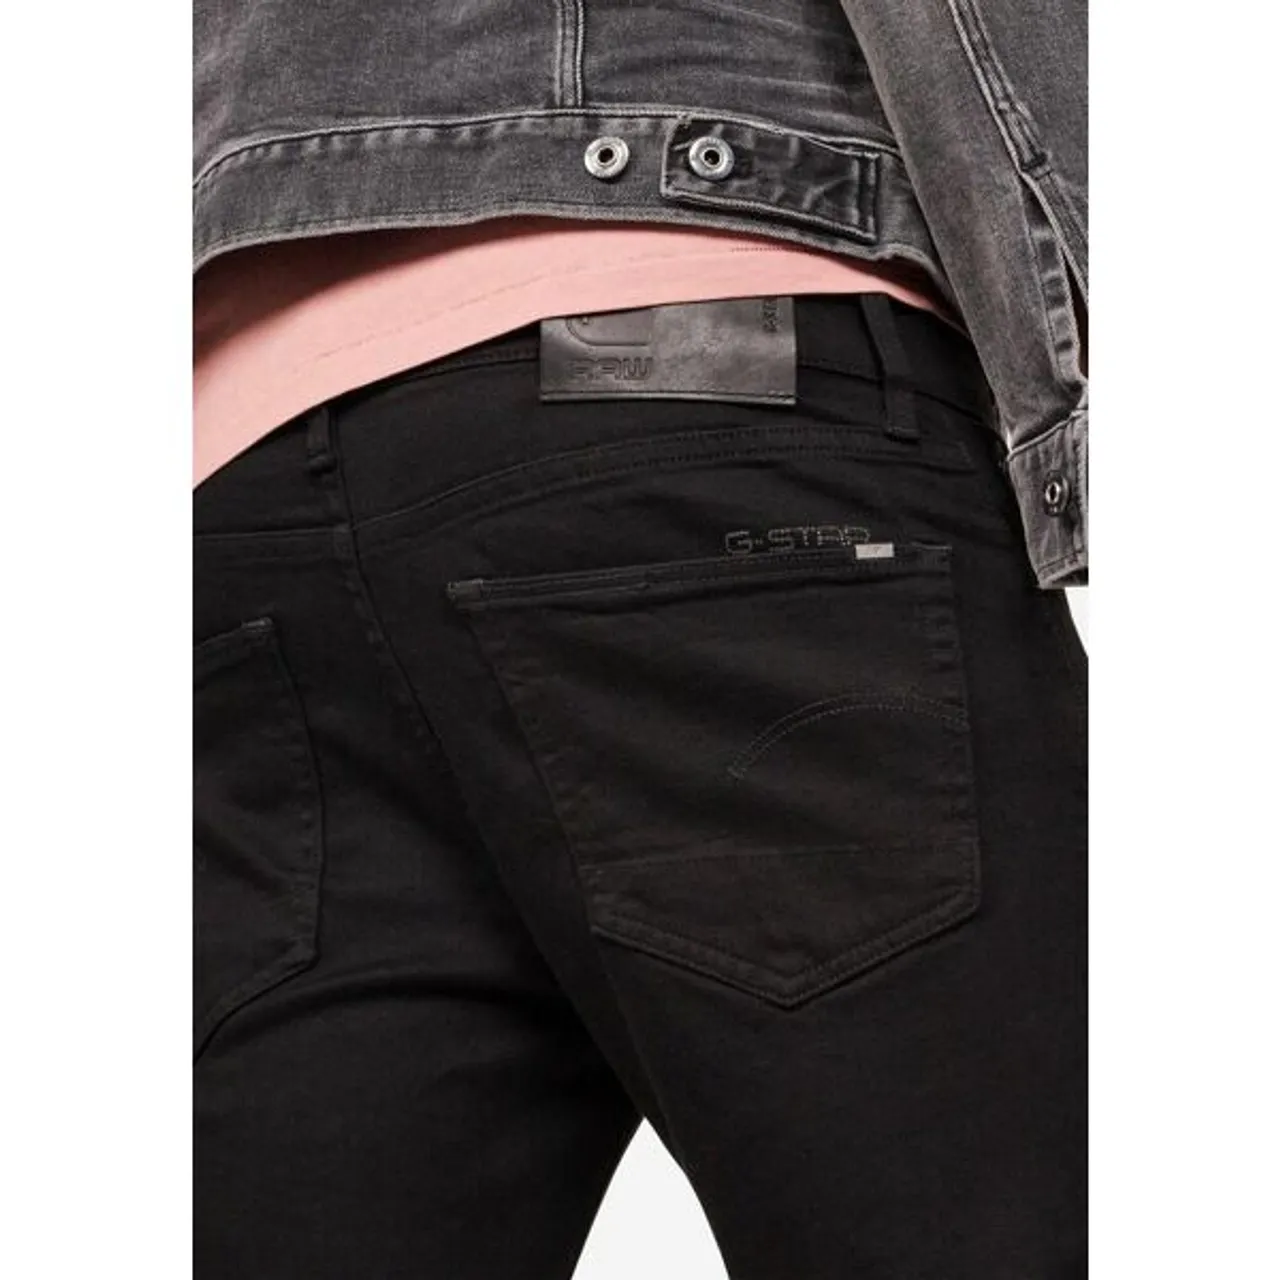 Slim-fit-Jeans G-STAR RAW "3301 Slim" Gr. 38, Länge 36, schwarz Herren Jeans Slim Fit